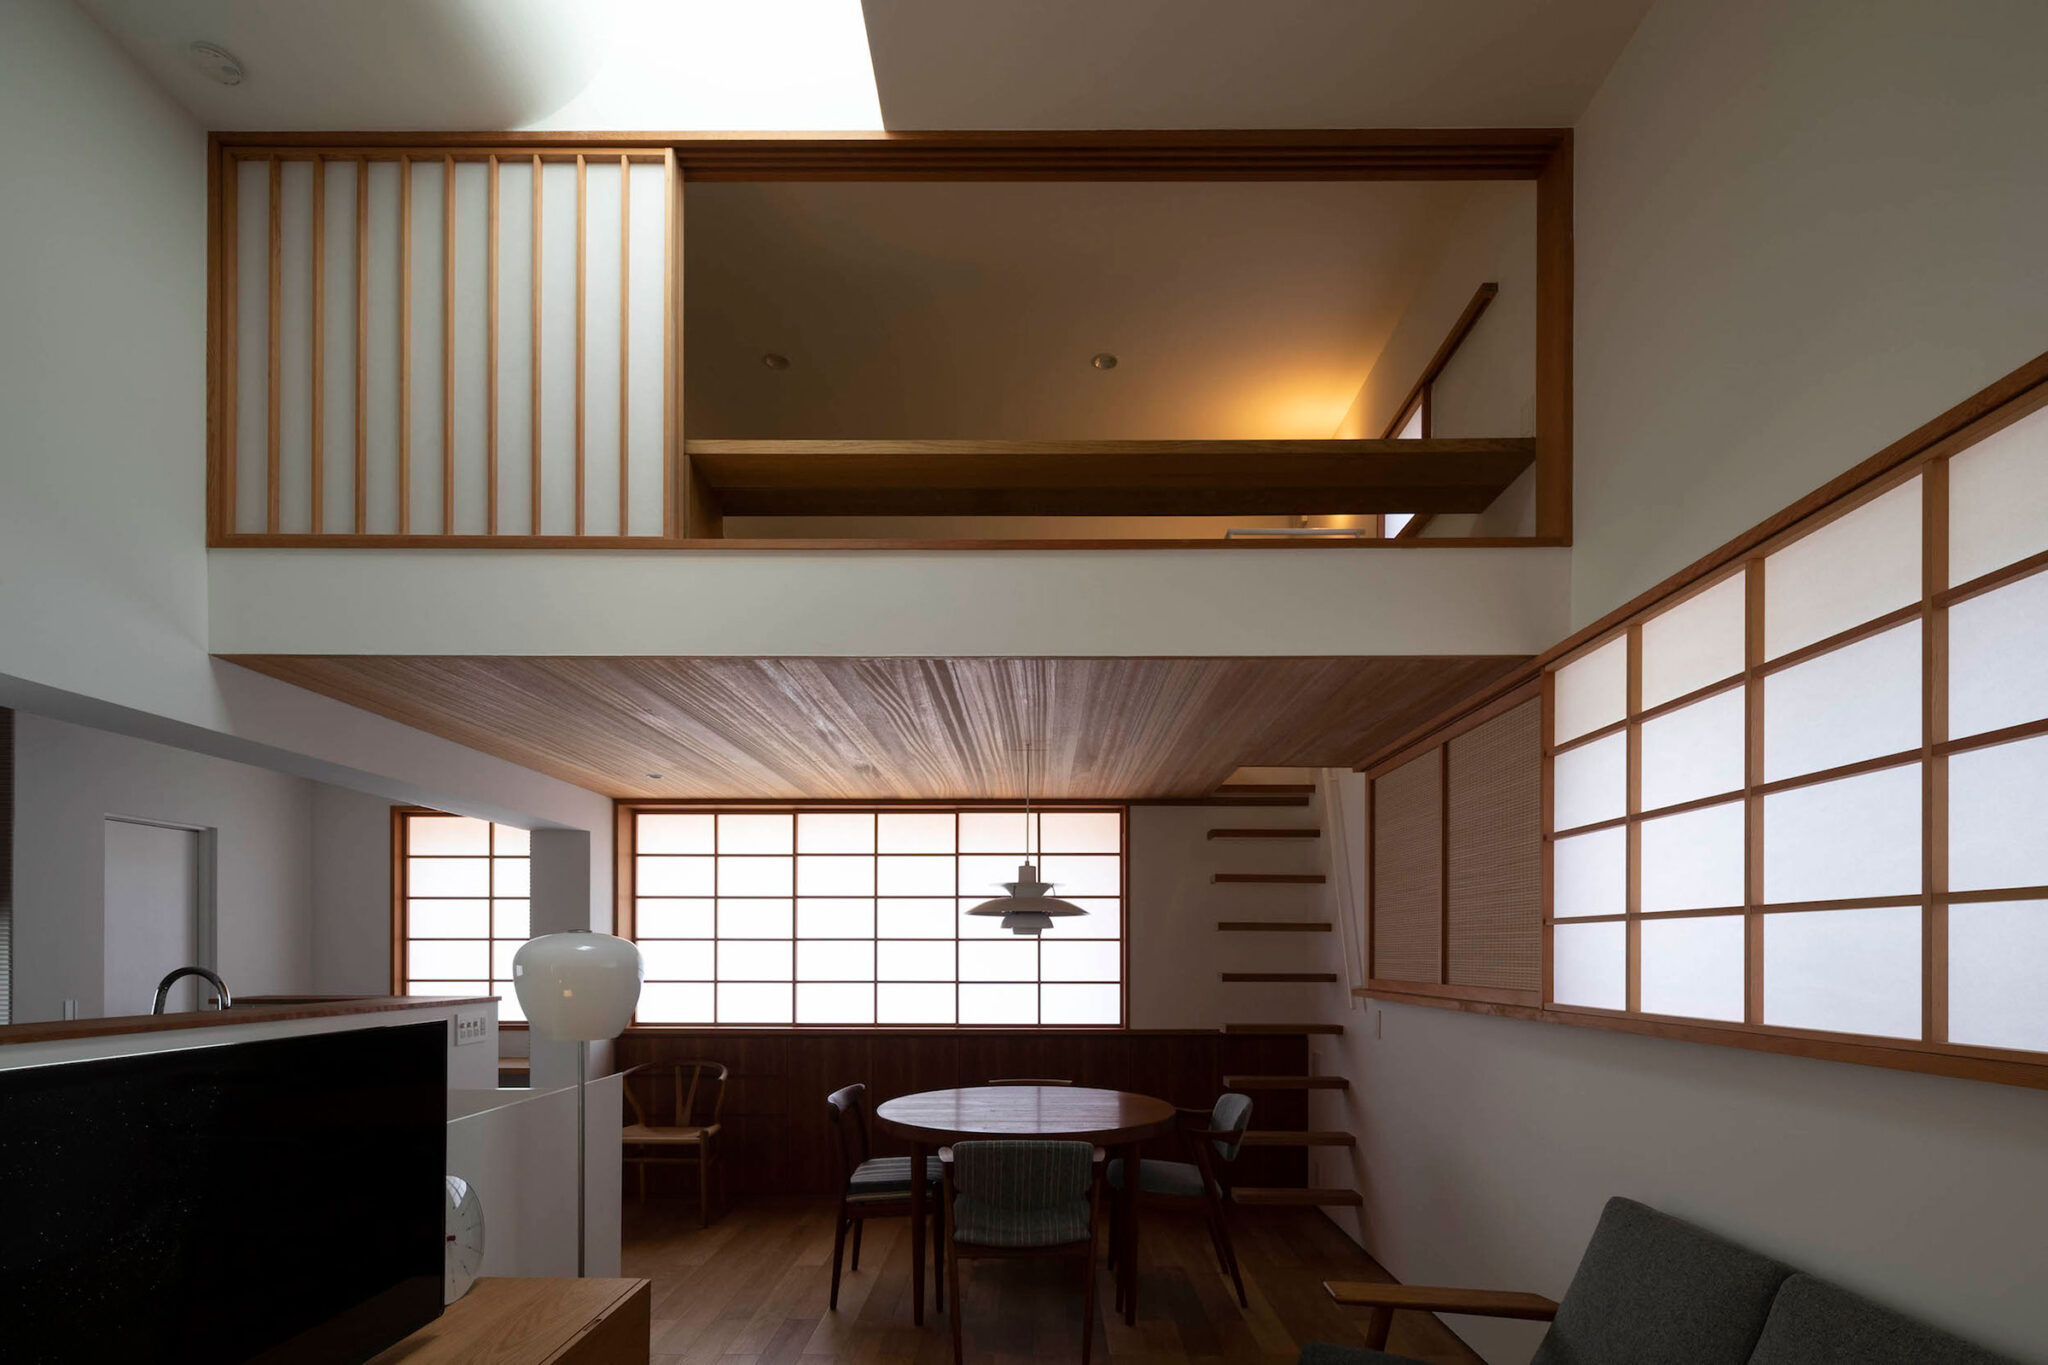 八島正年 八島夕子 八島建築設計事務所による 東京 武蔵野市の住宅 吉祥寺南の家 Architecturephoto Net